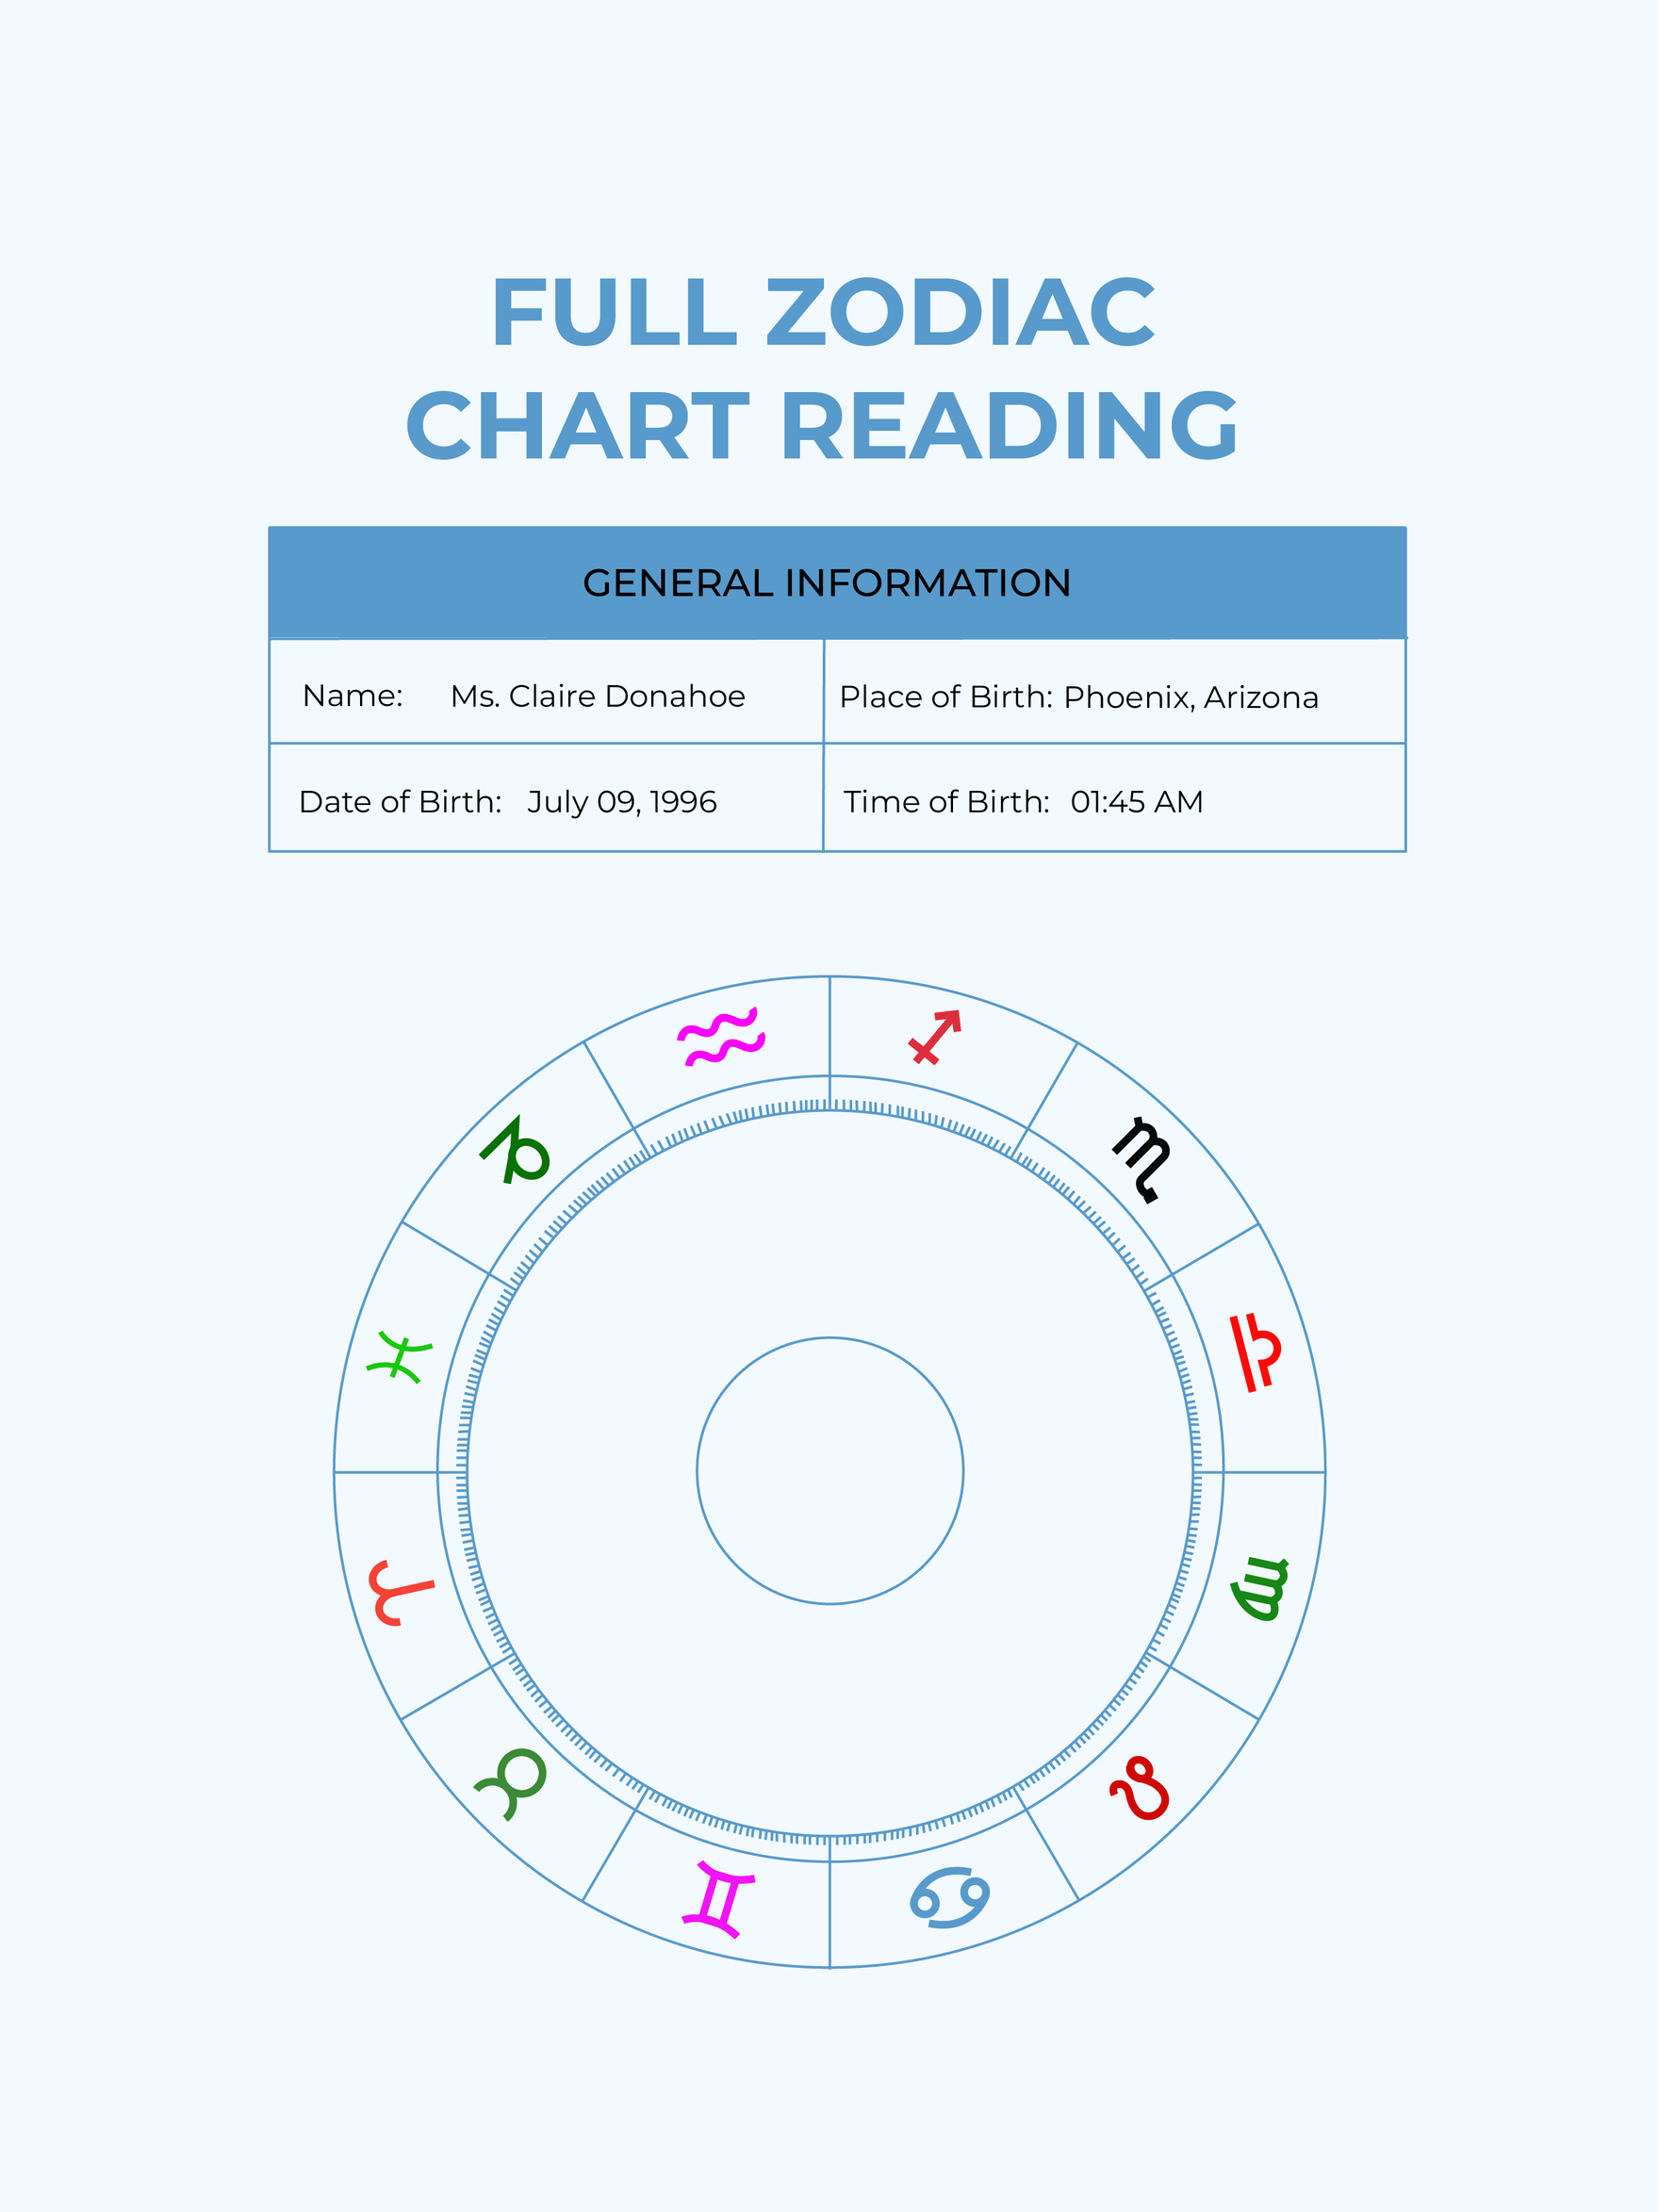 Free Full Zodiac Chart Reading  in PDF, Illustrator